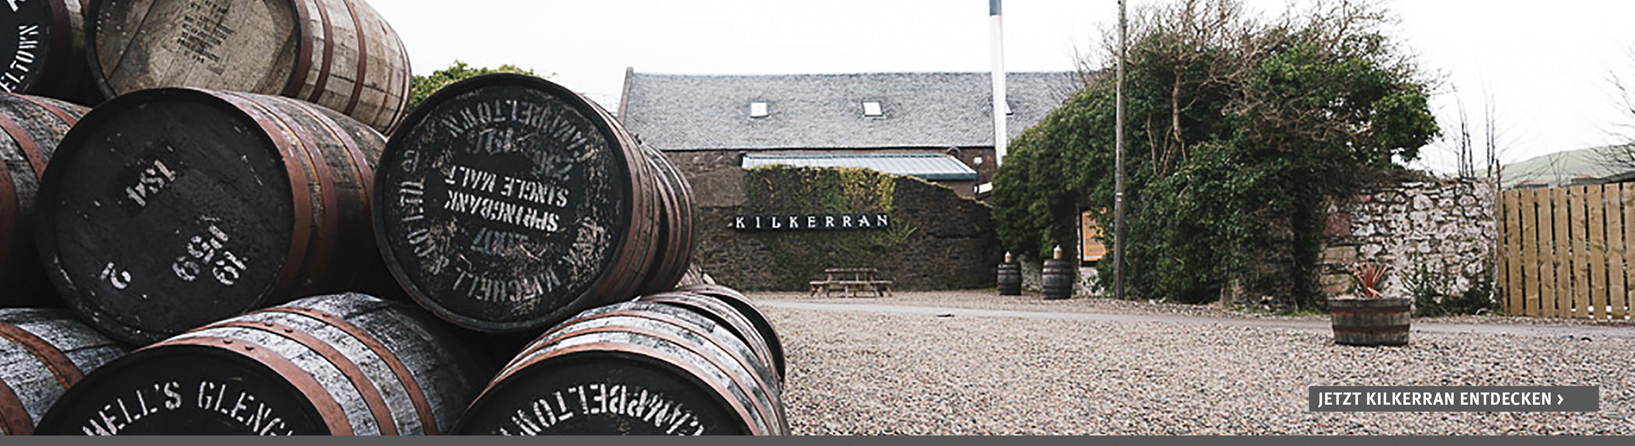 Glengyle Distillerie